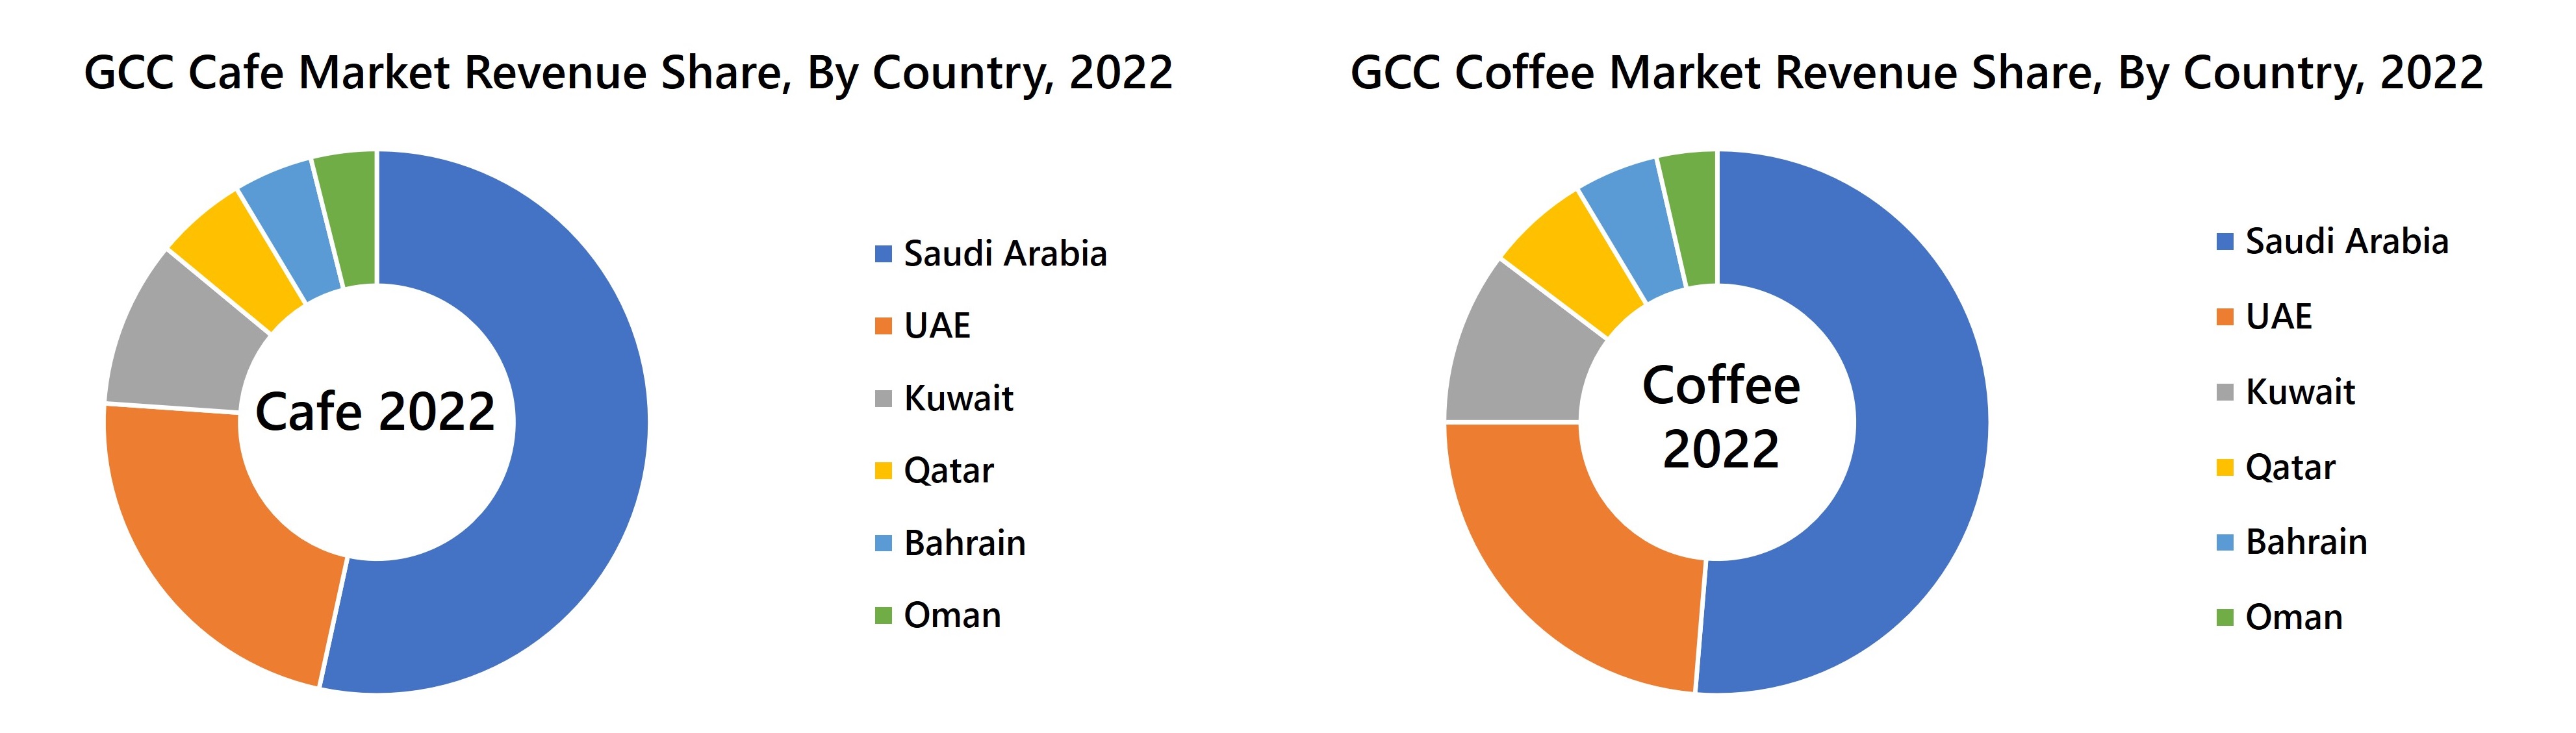 GCC Cafe Market Revenue Share